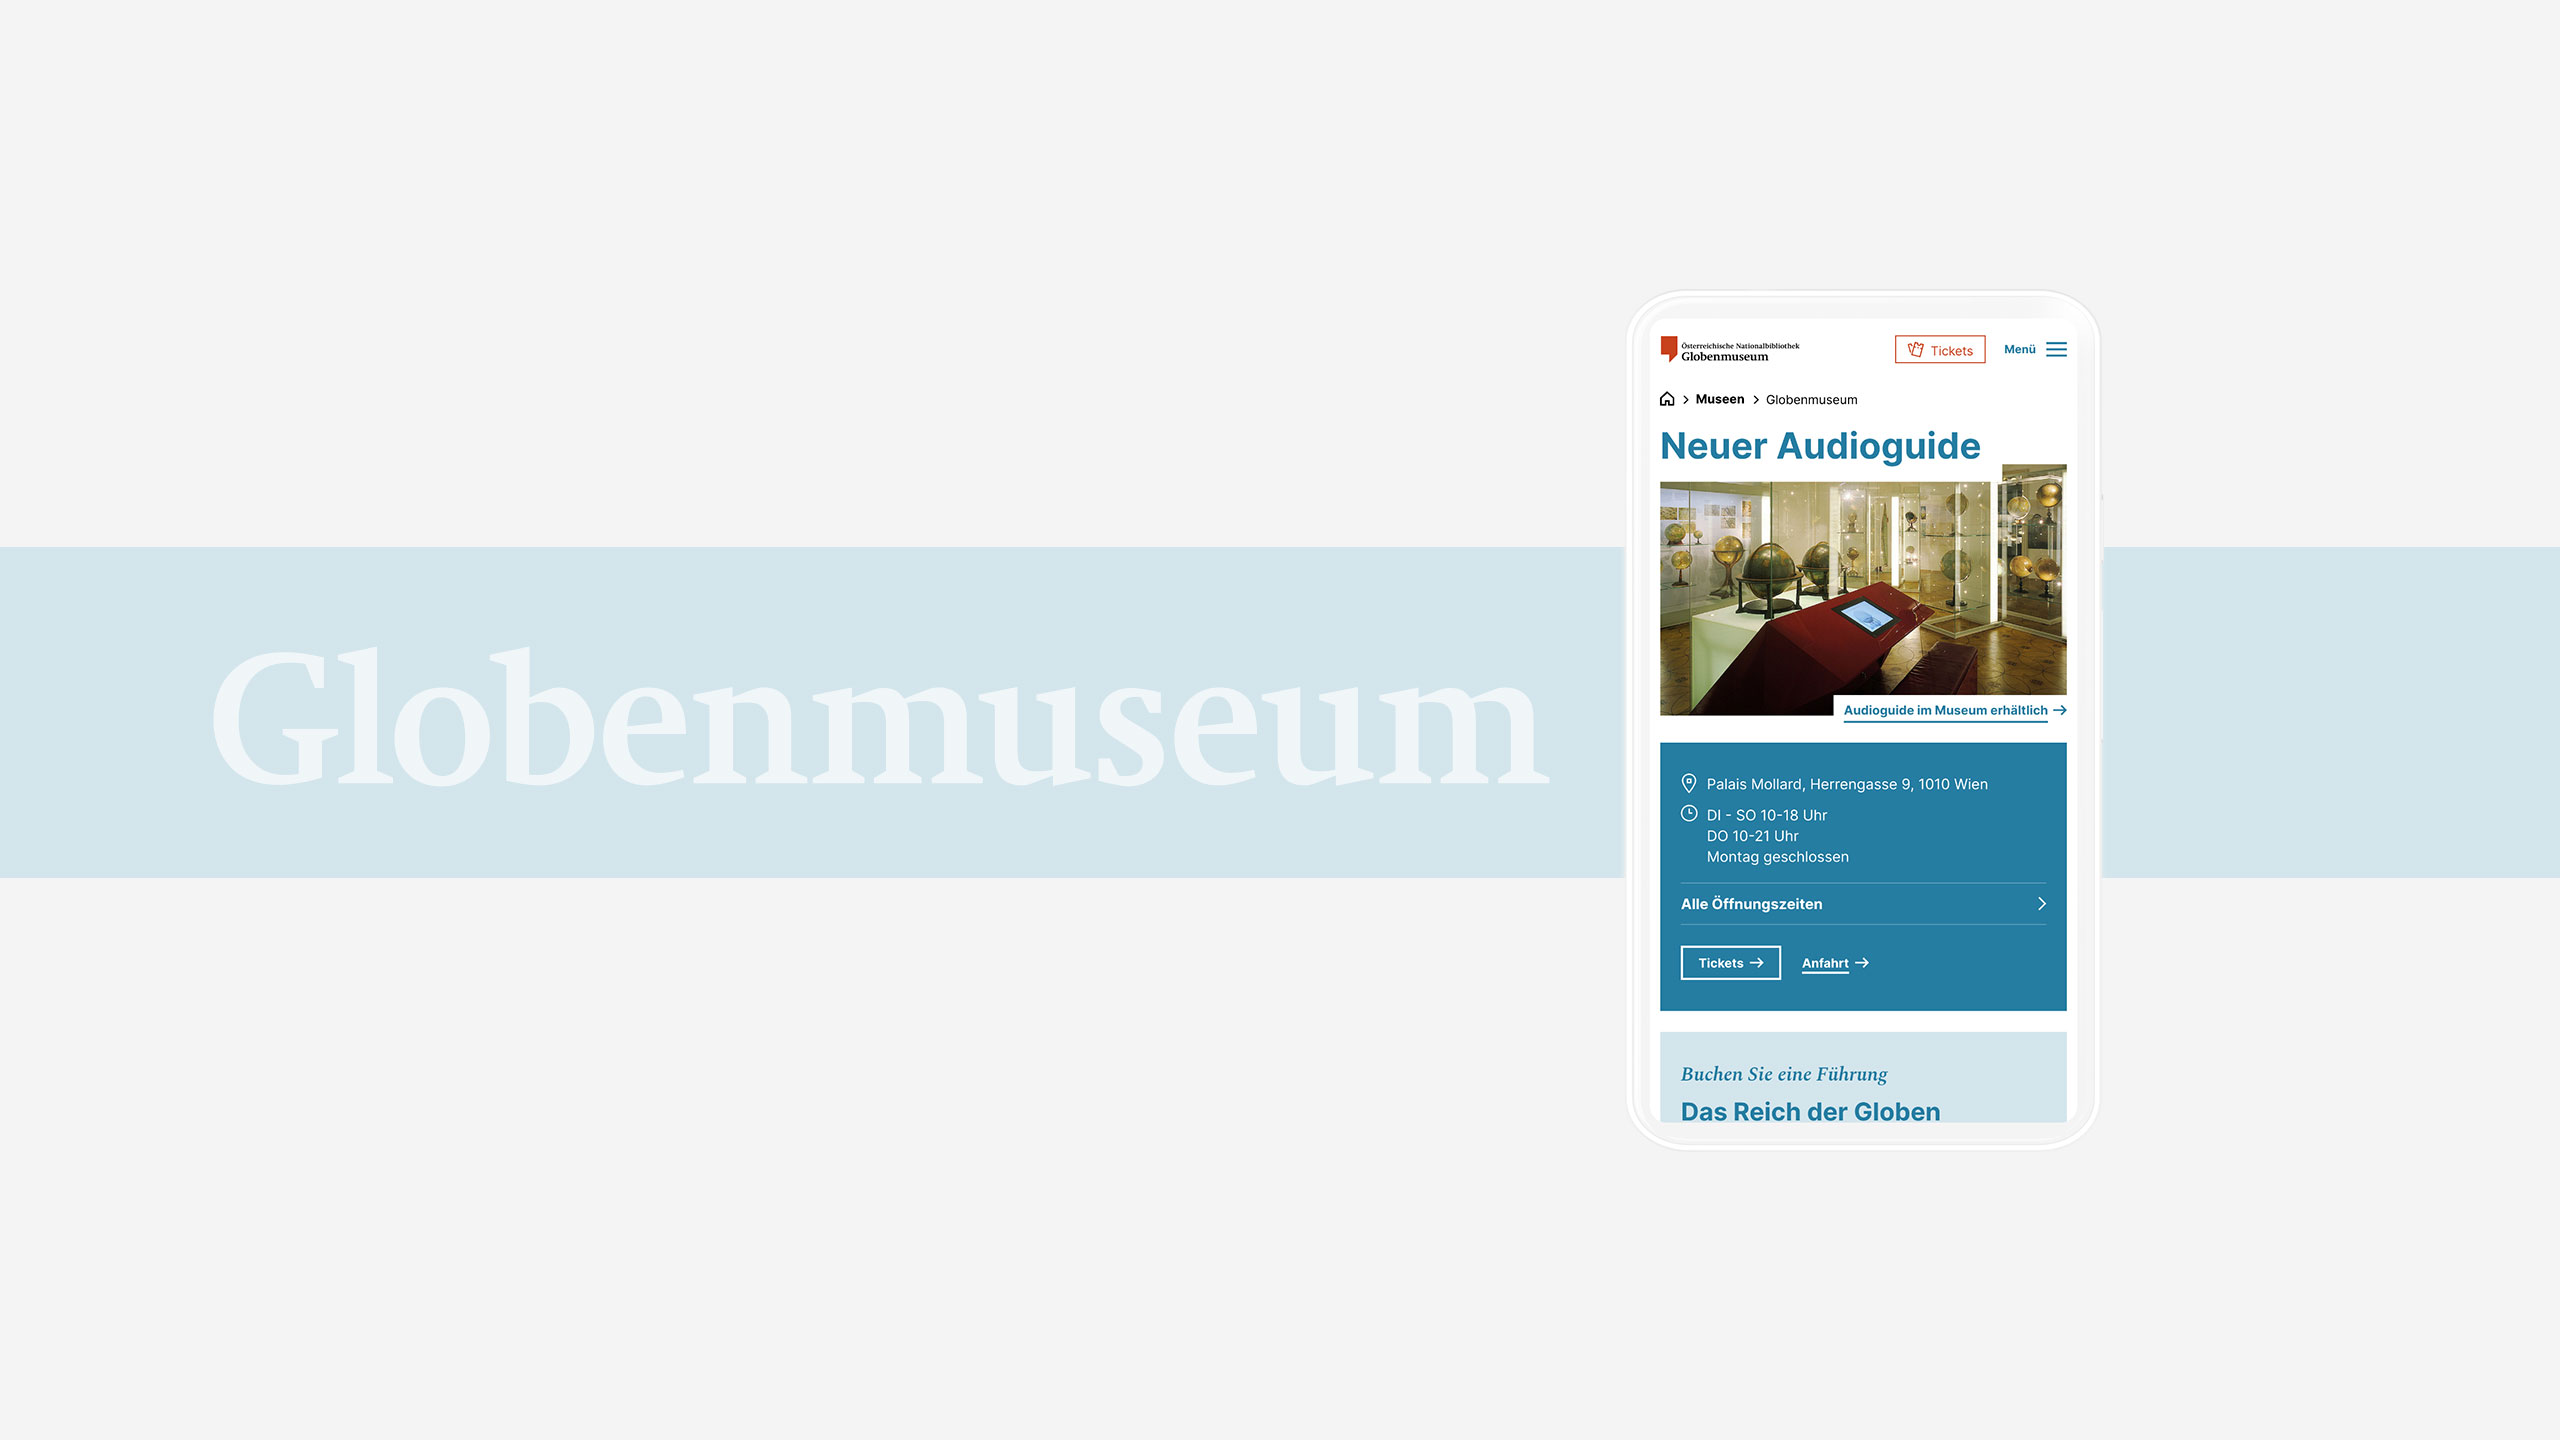 Ein mobiles Mockup der Museums-Seite des Globenmuseums der Nationalbibliothek